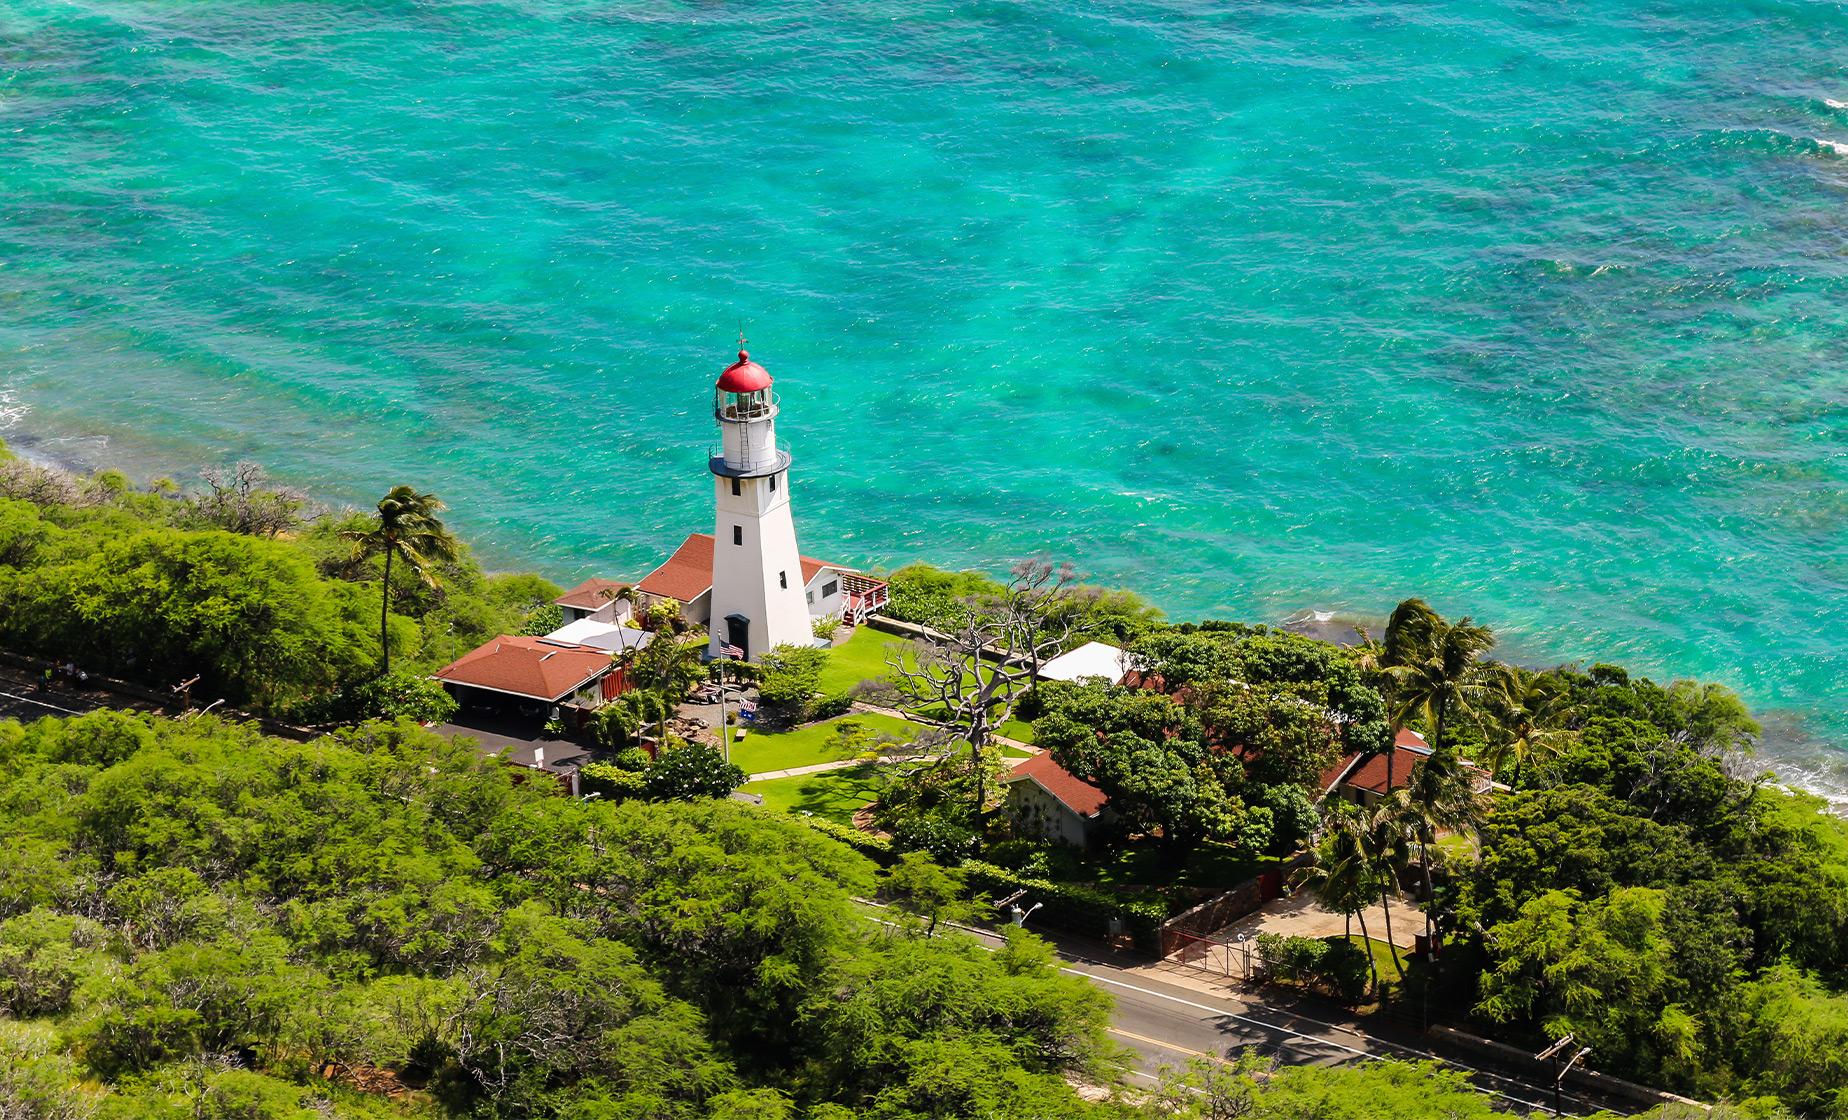 Diamond Head and Waikiki Segway Tour in Oahu (Diamond Head Lighthouse, Koko Head Crater)